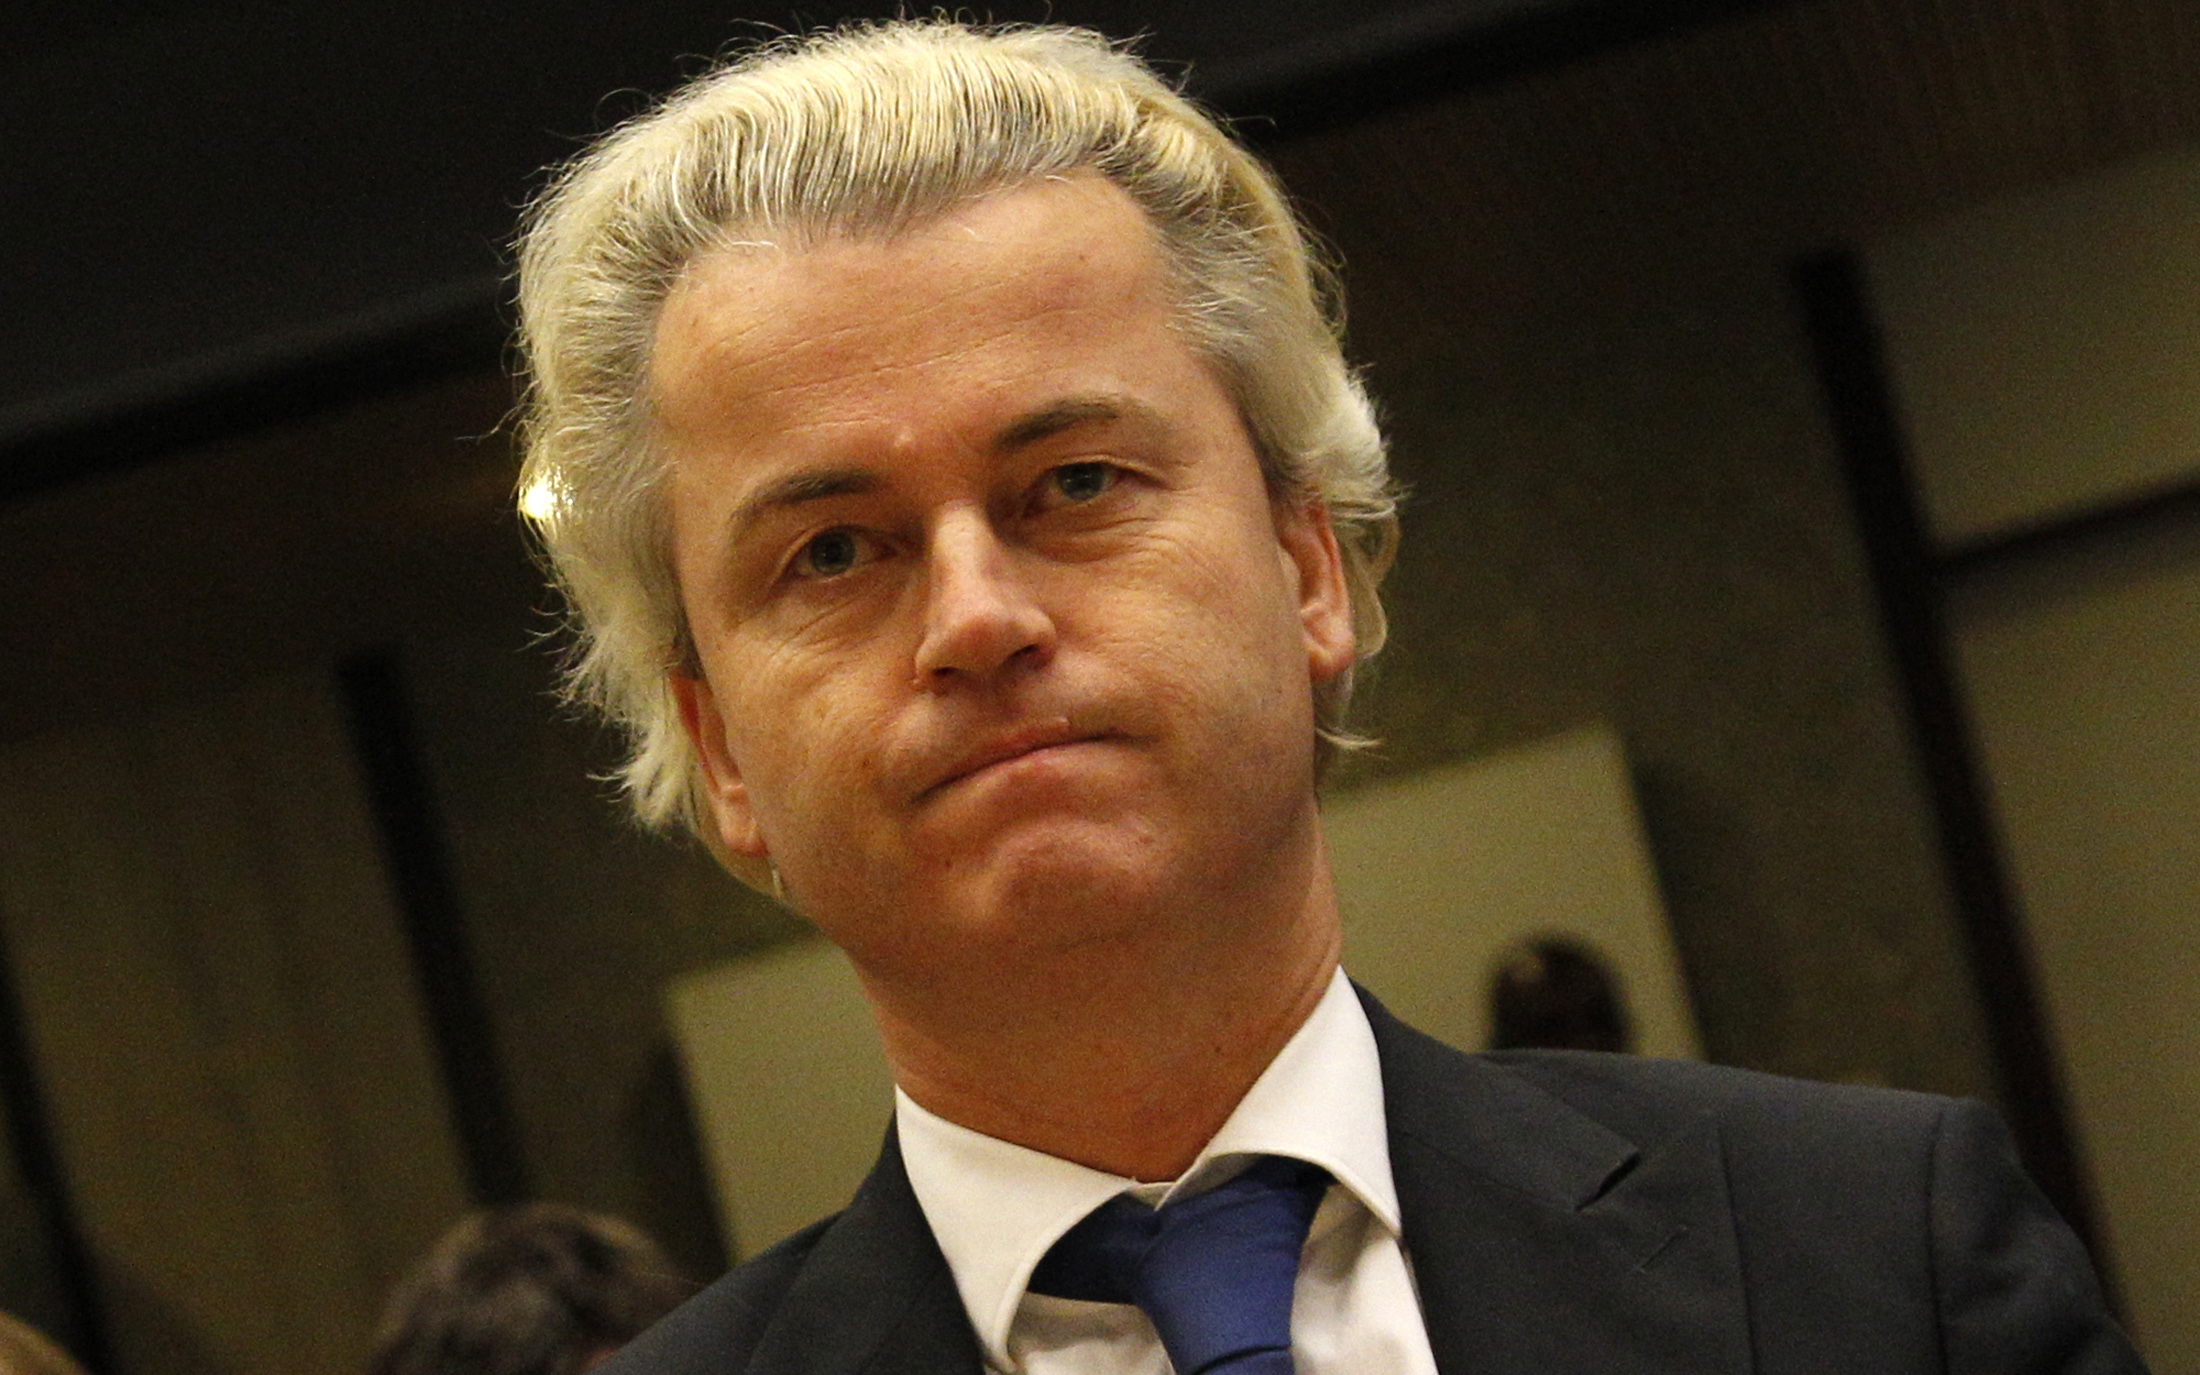 Hets mot folkgrupp, Geert Wilders, Främlingsfientlighet, Rasism, Islamofobi, Domstol